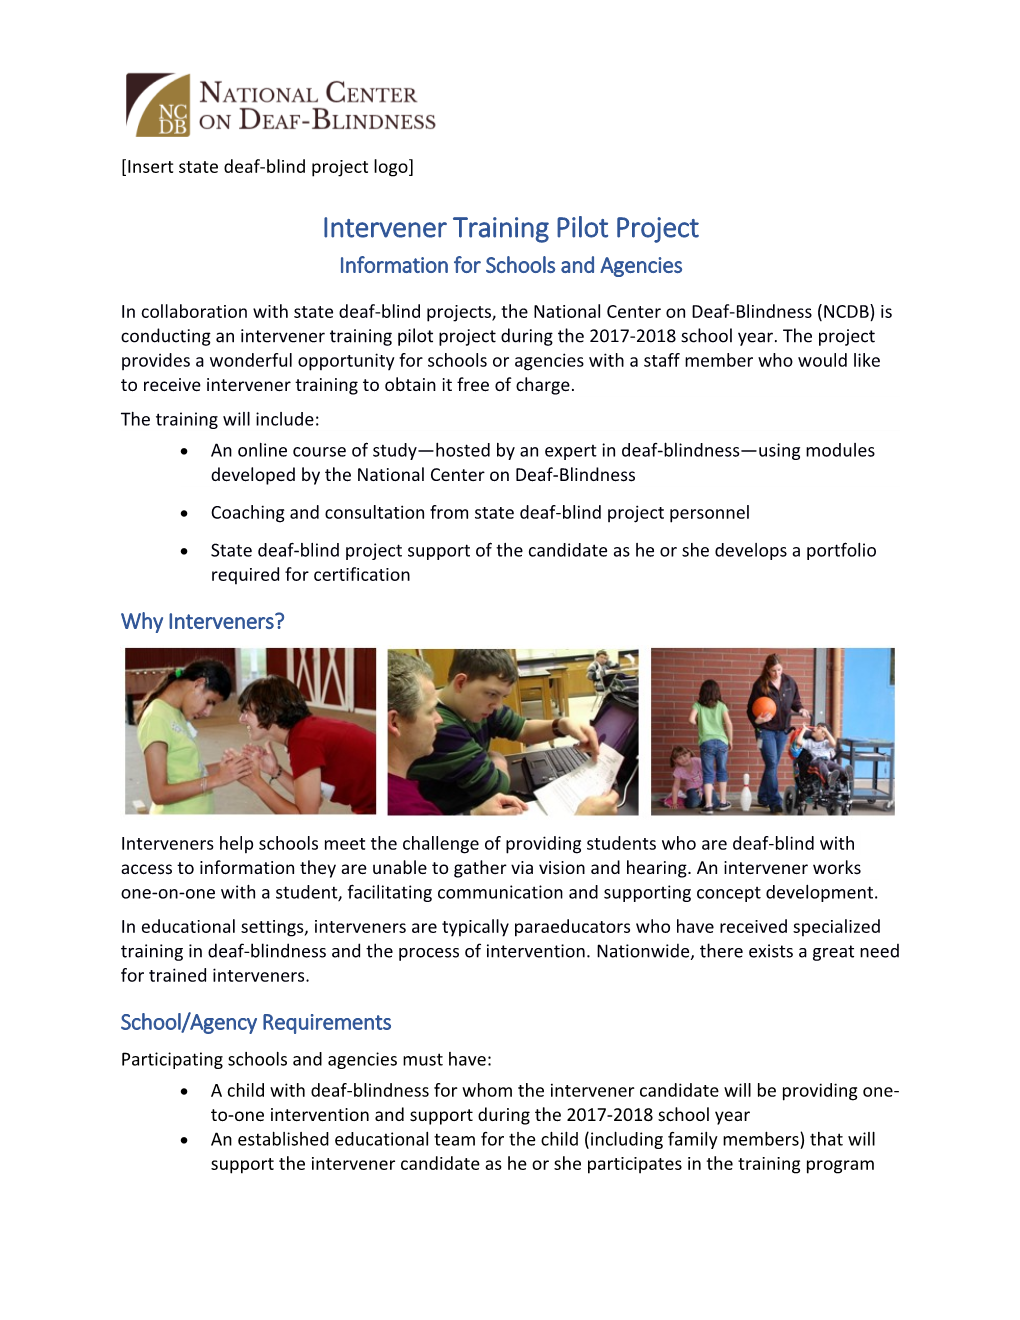 Intervener Training Pilot Project: Information for Schools and Agencies